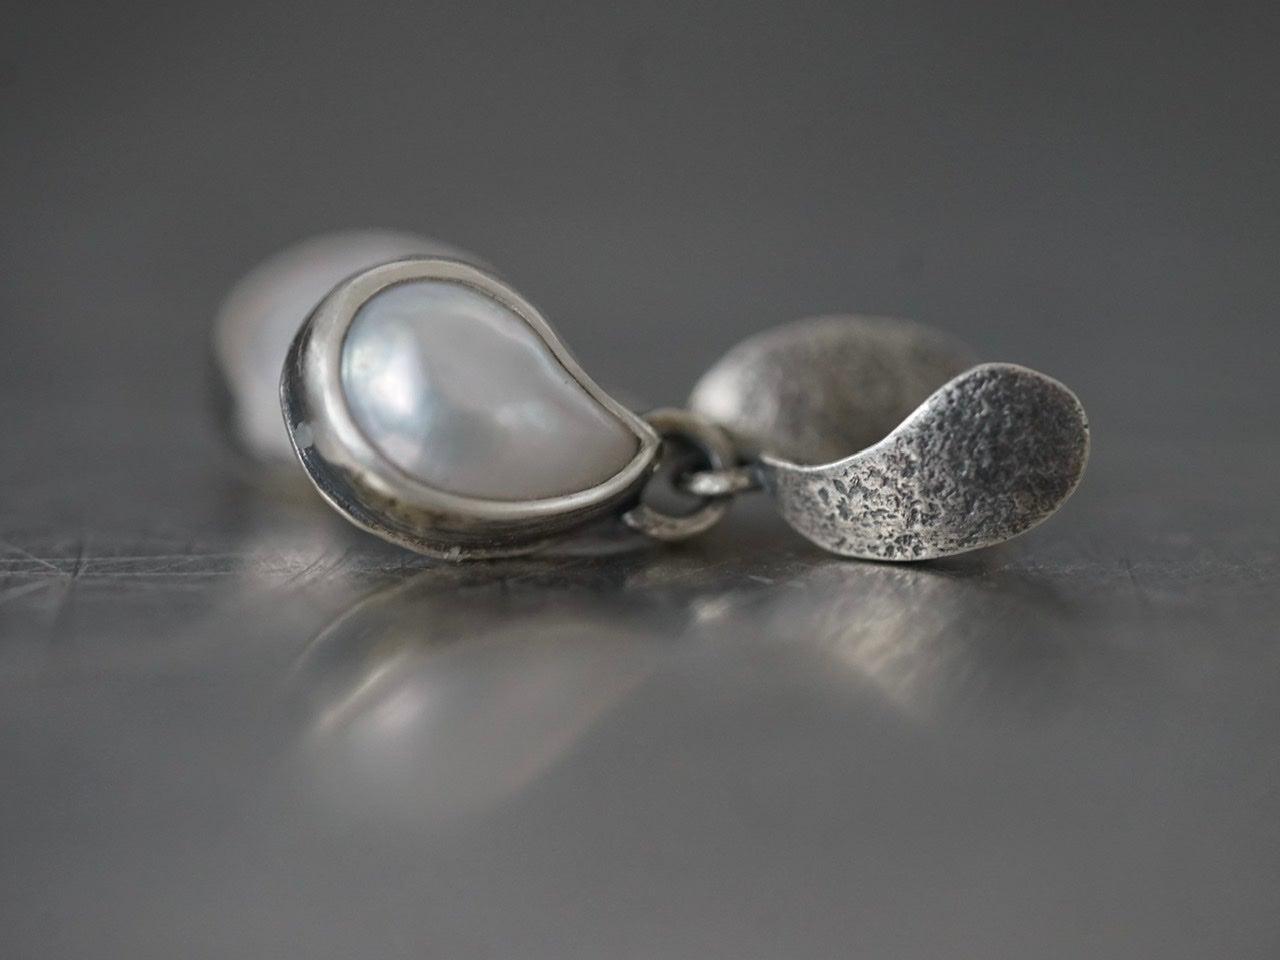 Dangly freshwater pearl post earrings